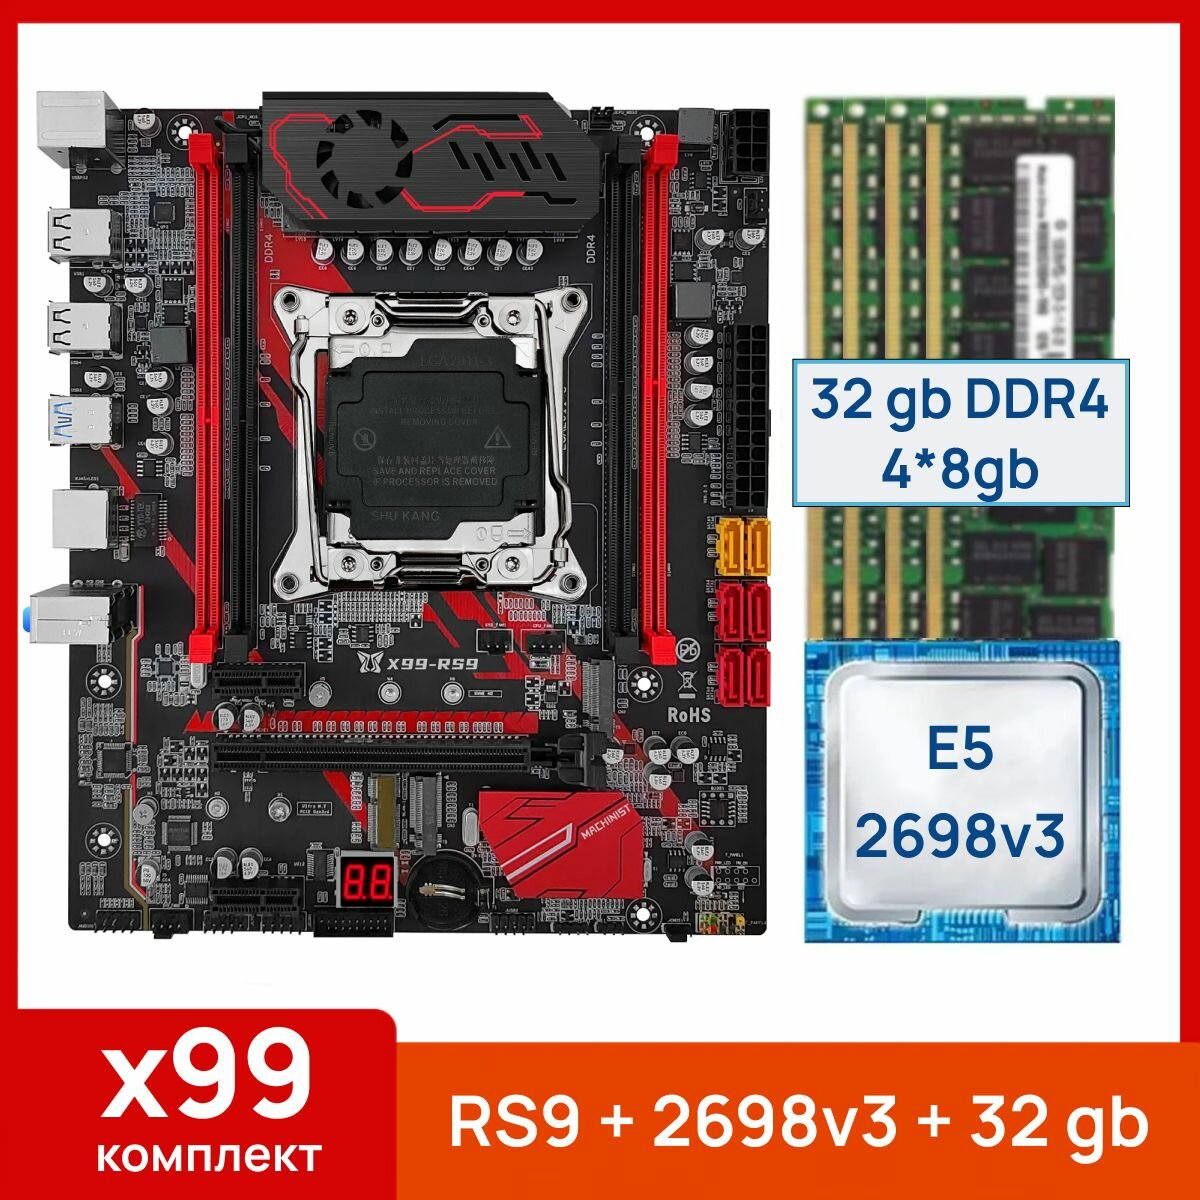 Комплект: Juxieshi/Machinist X99 RS9 + Xeon E5 2698v3 + 32 gb(4x8gb) DDR4 ecc reg